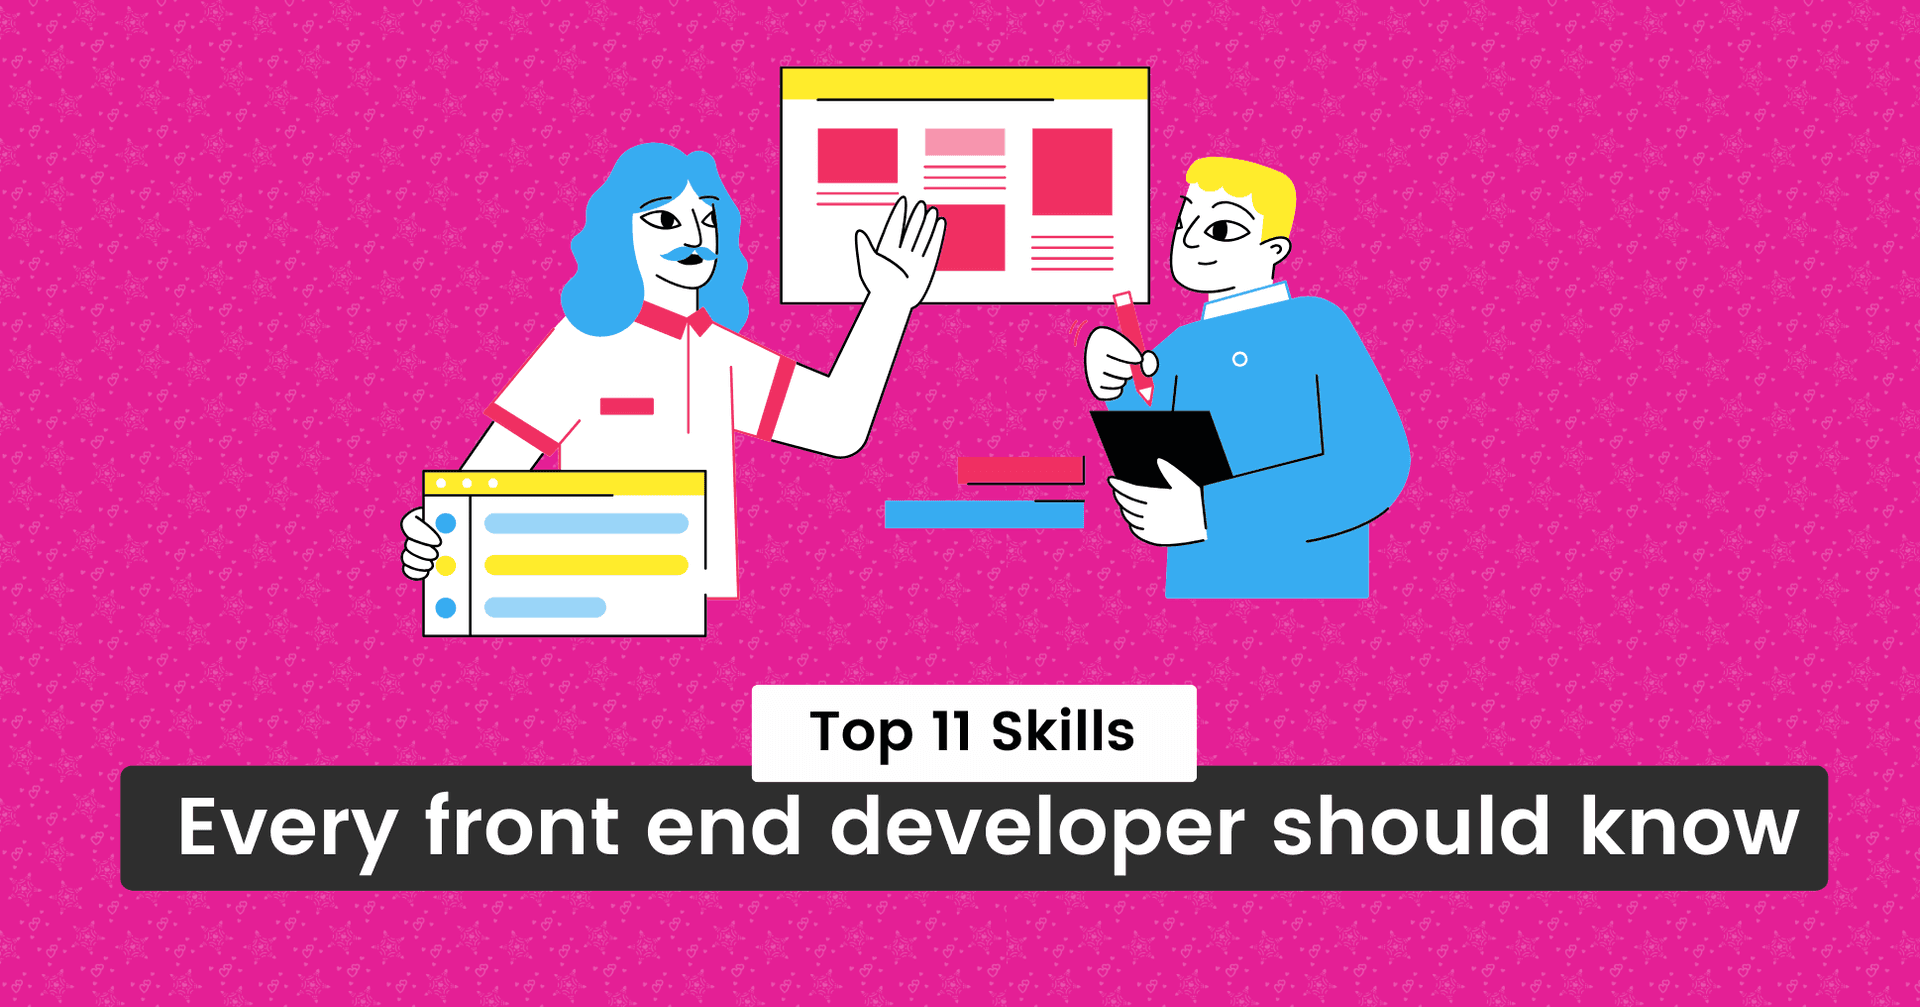 Top 11 Skills Every Entry Level Front End Developer Should Have